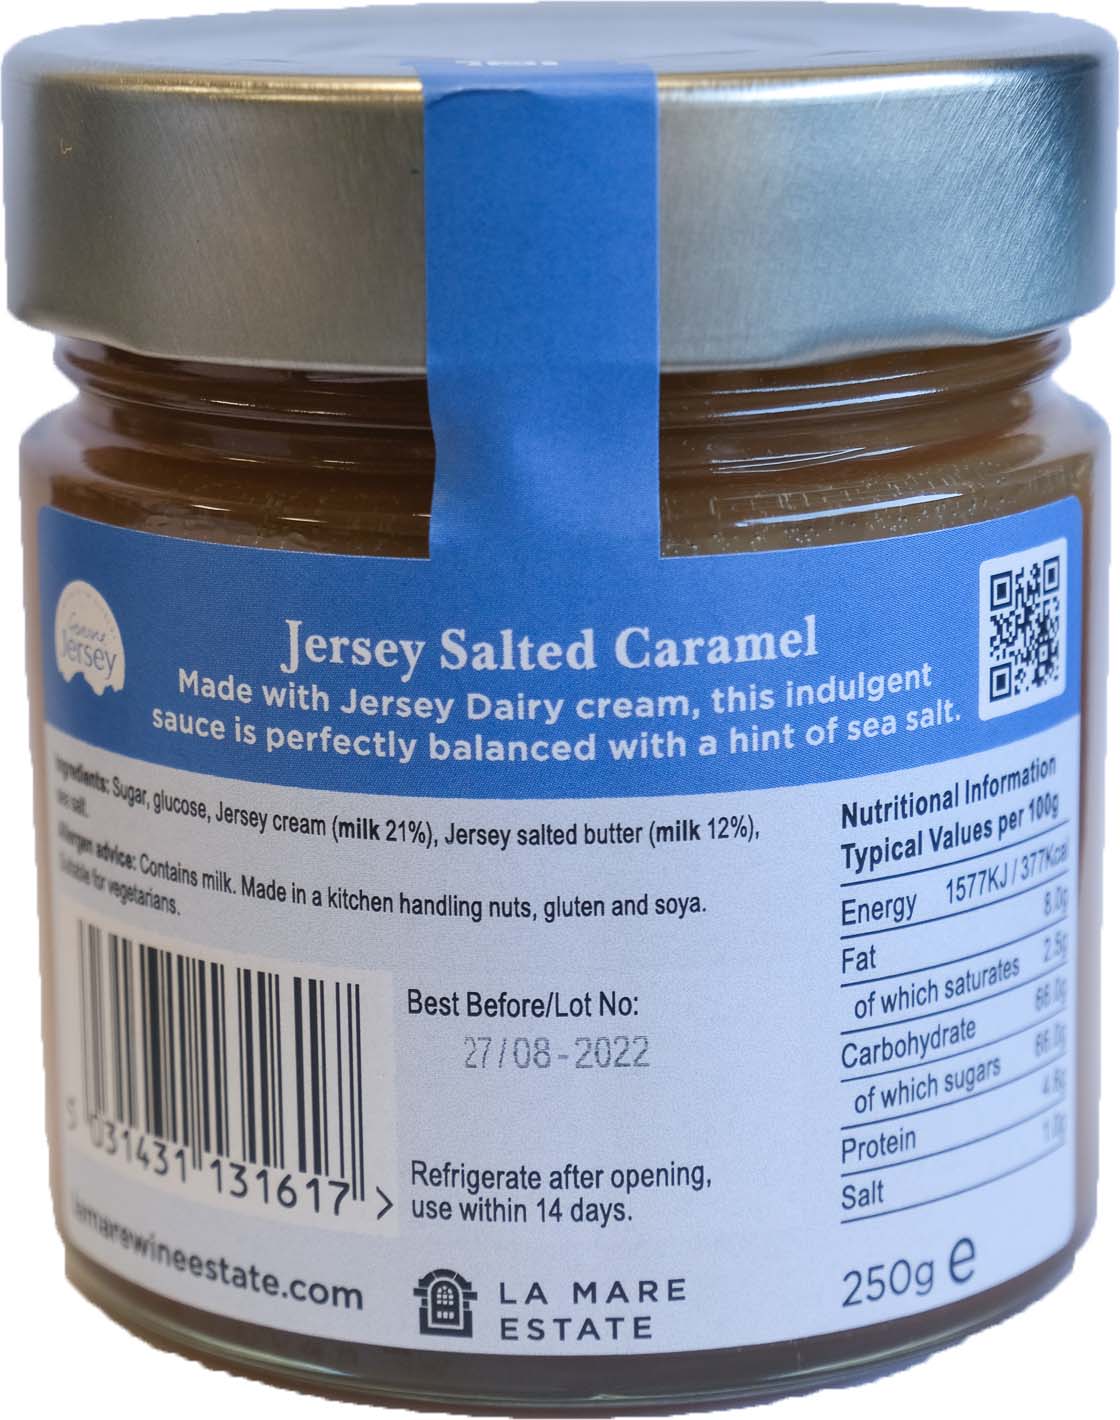 Jersey Salted Caramel